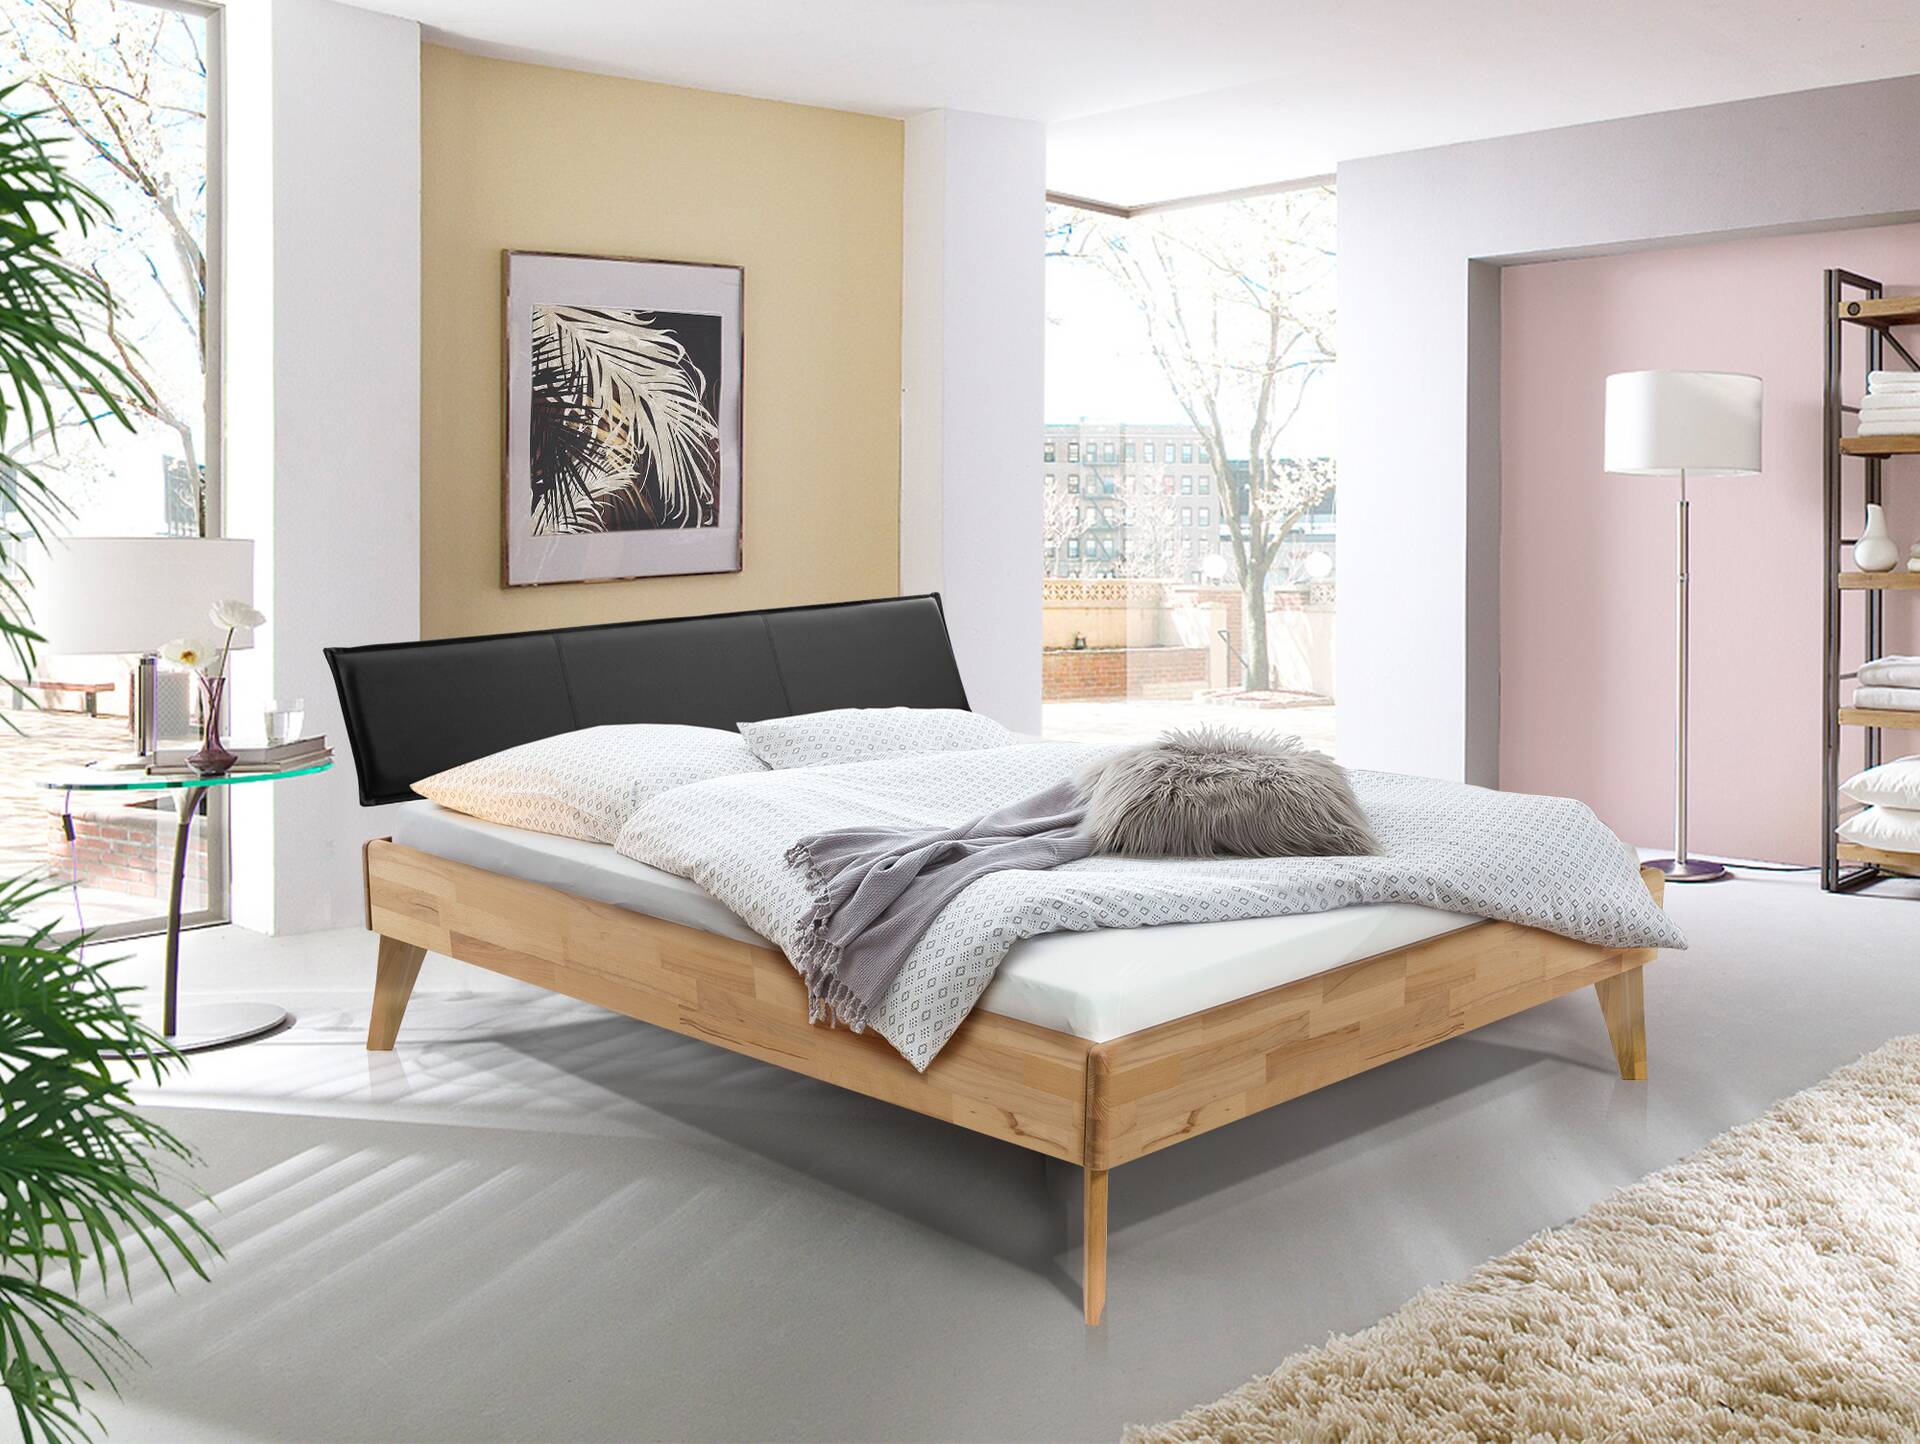 CALIDO 4-Fuß-Bett mit Polster-Kopfteil, Material Massivholz 180 x 220 cm | Eiche geölt | Kunstleder Schwarz | Komforthöhe